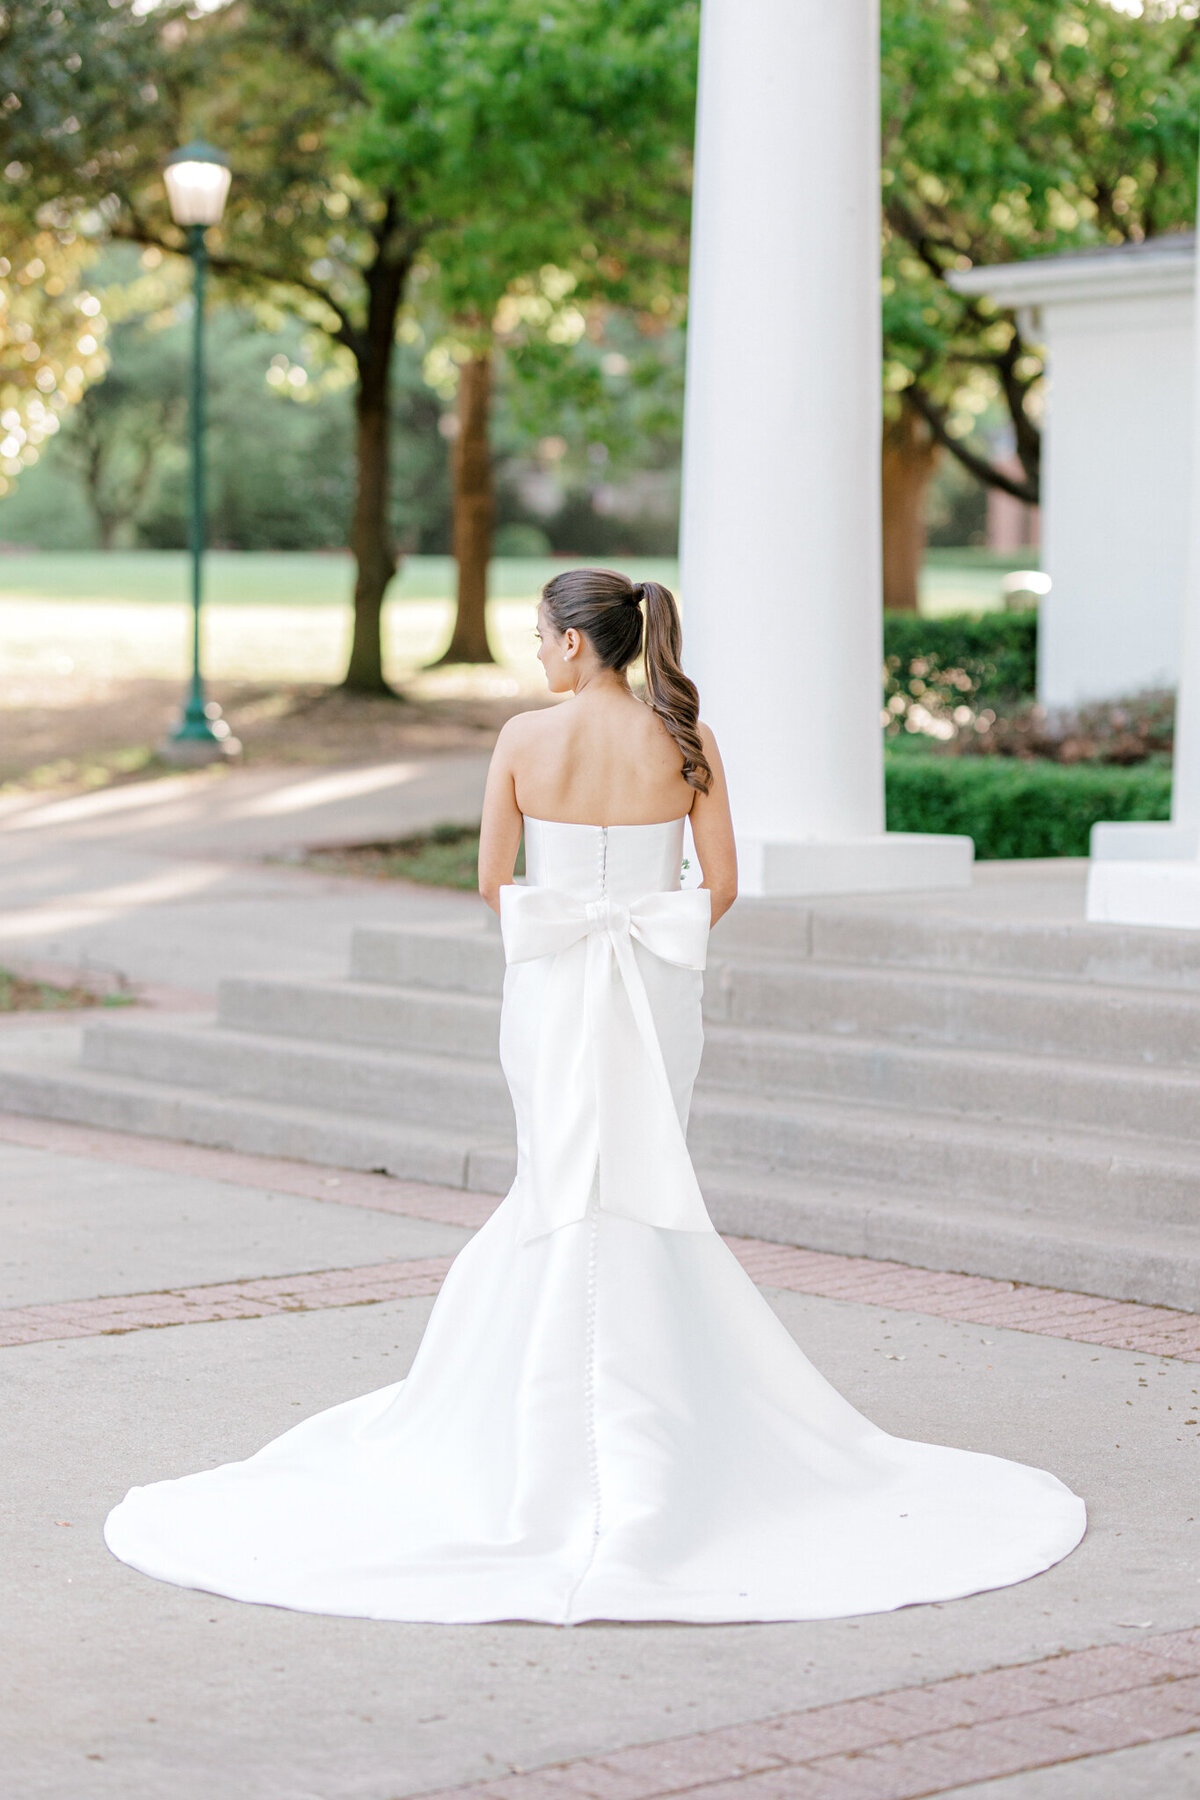 Annie's Bridal Portraits at Arlington Hall Turtle Creek Park | Dallas Wedding Photographer | Sami Kathryn Photography-9